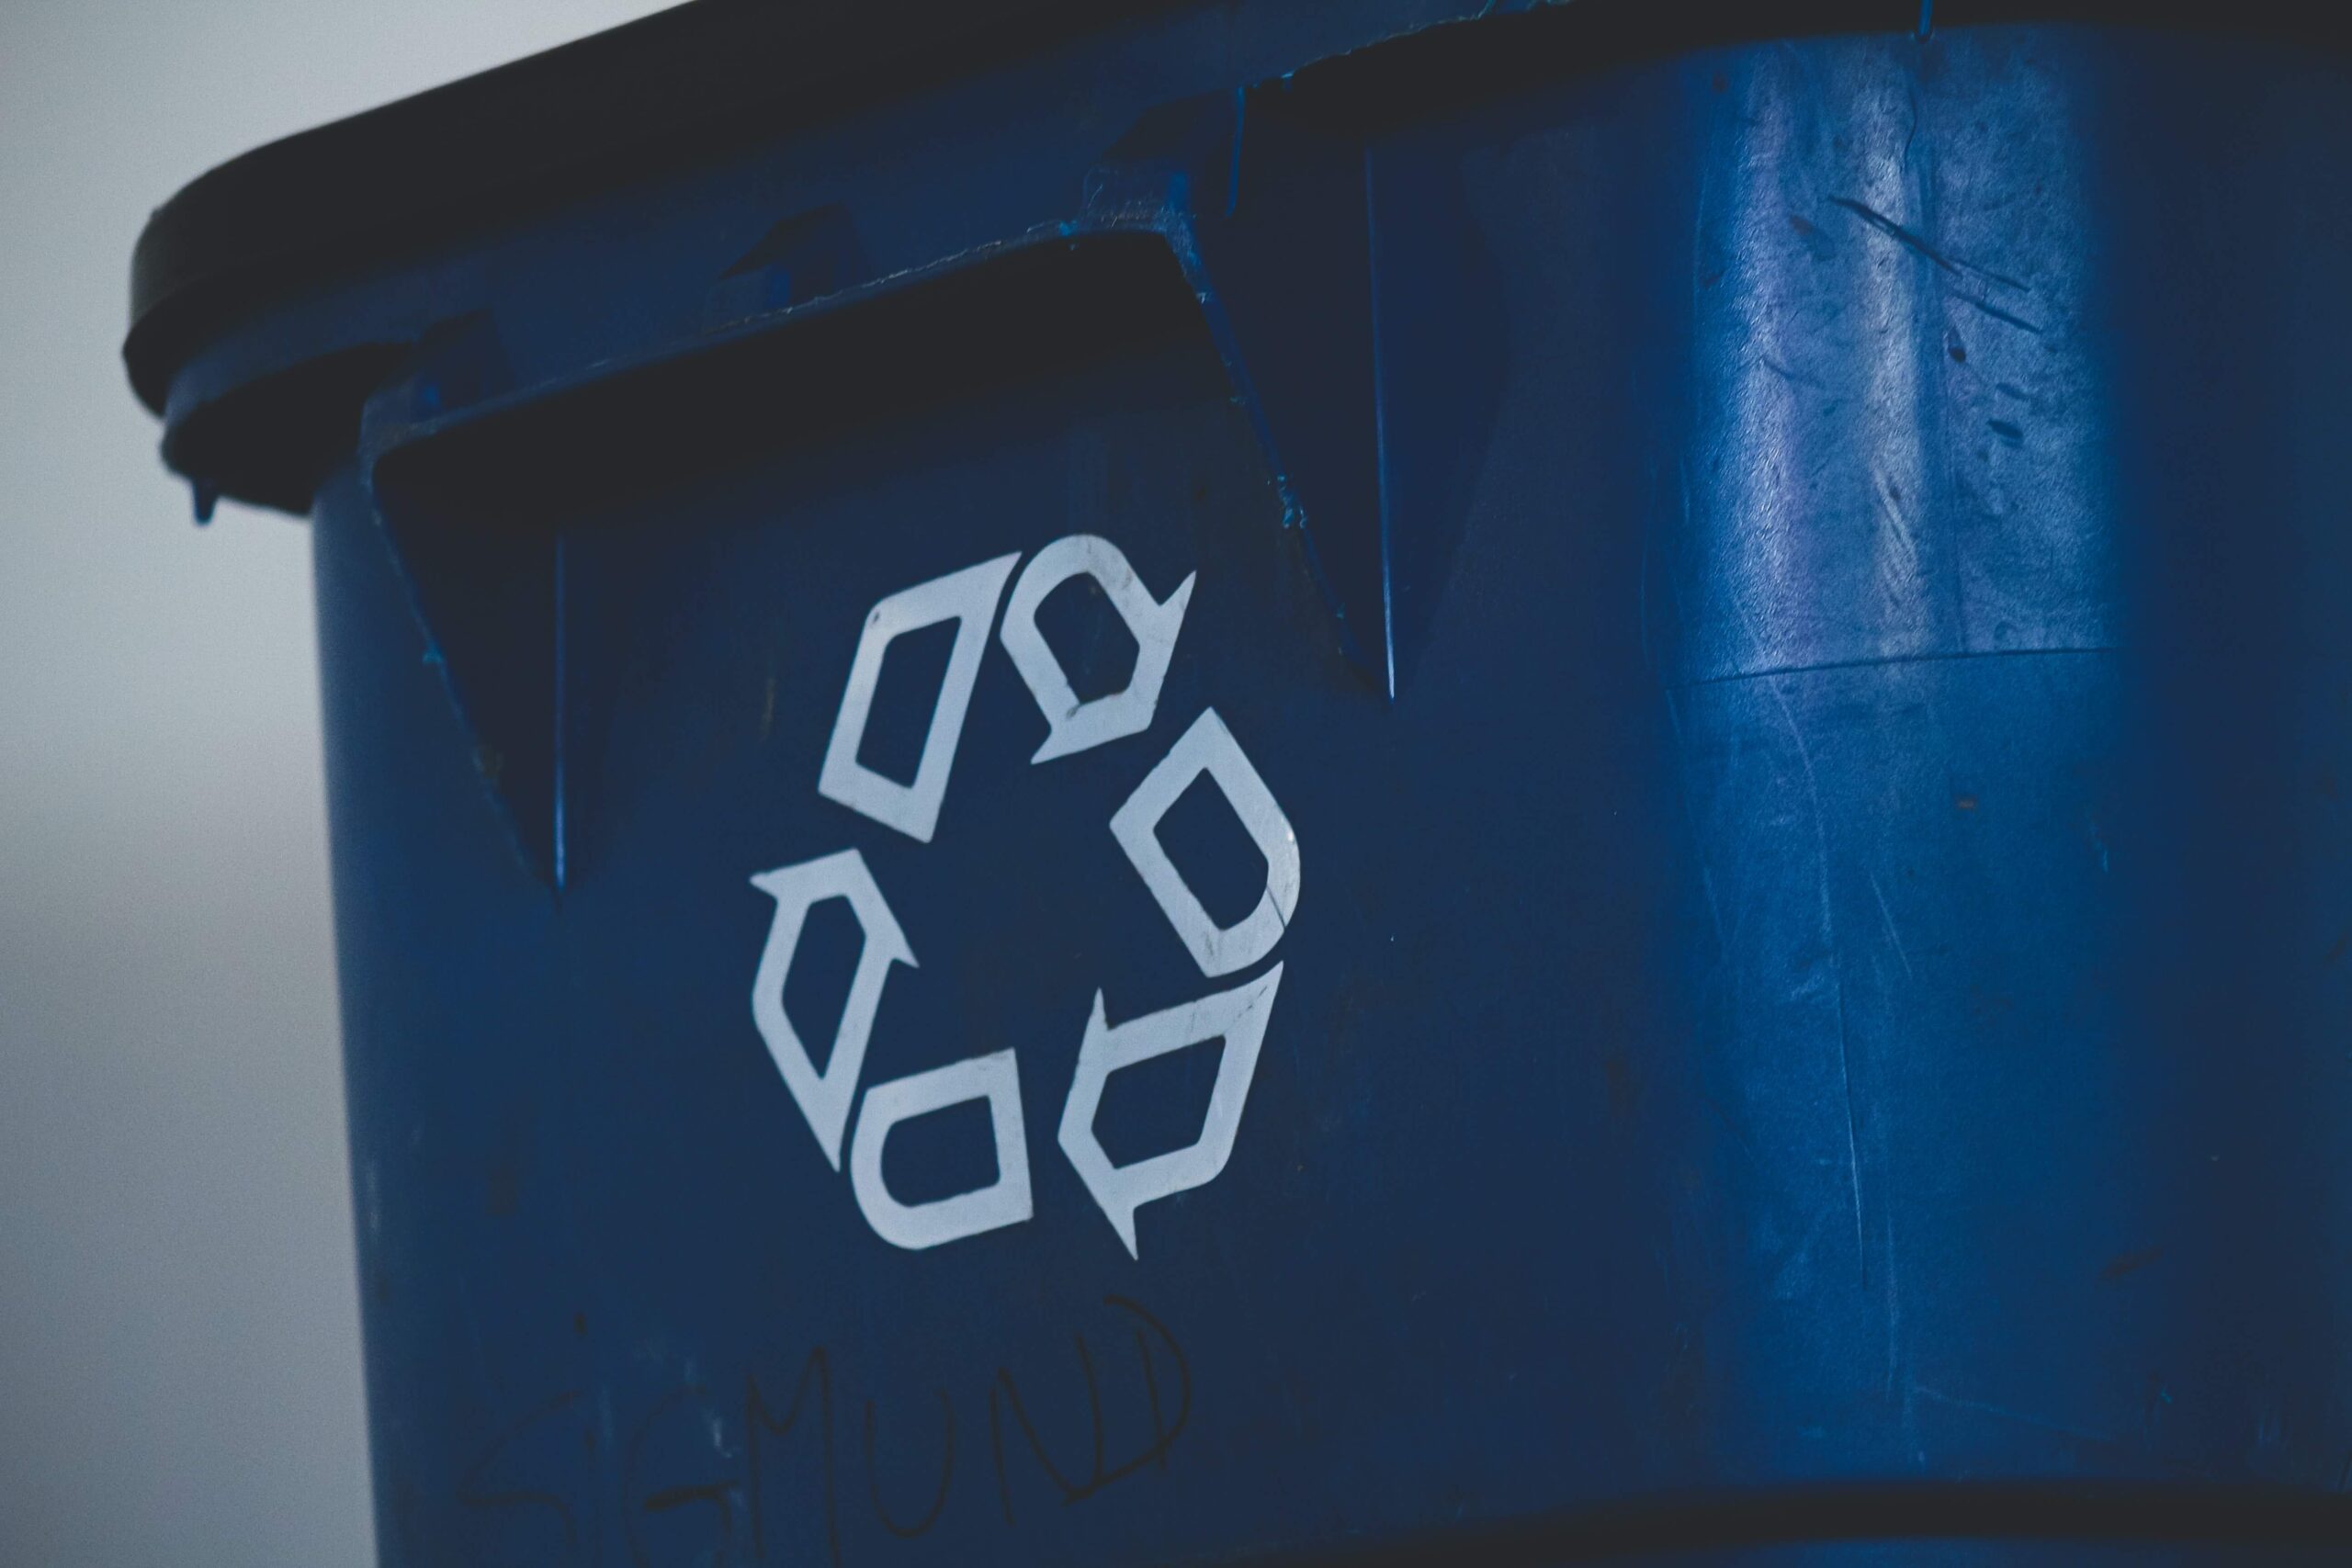 cardboard recycling bin